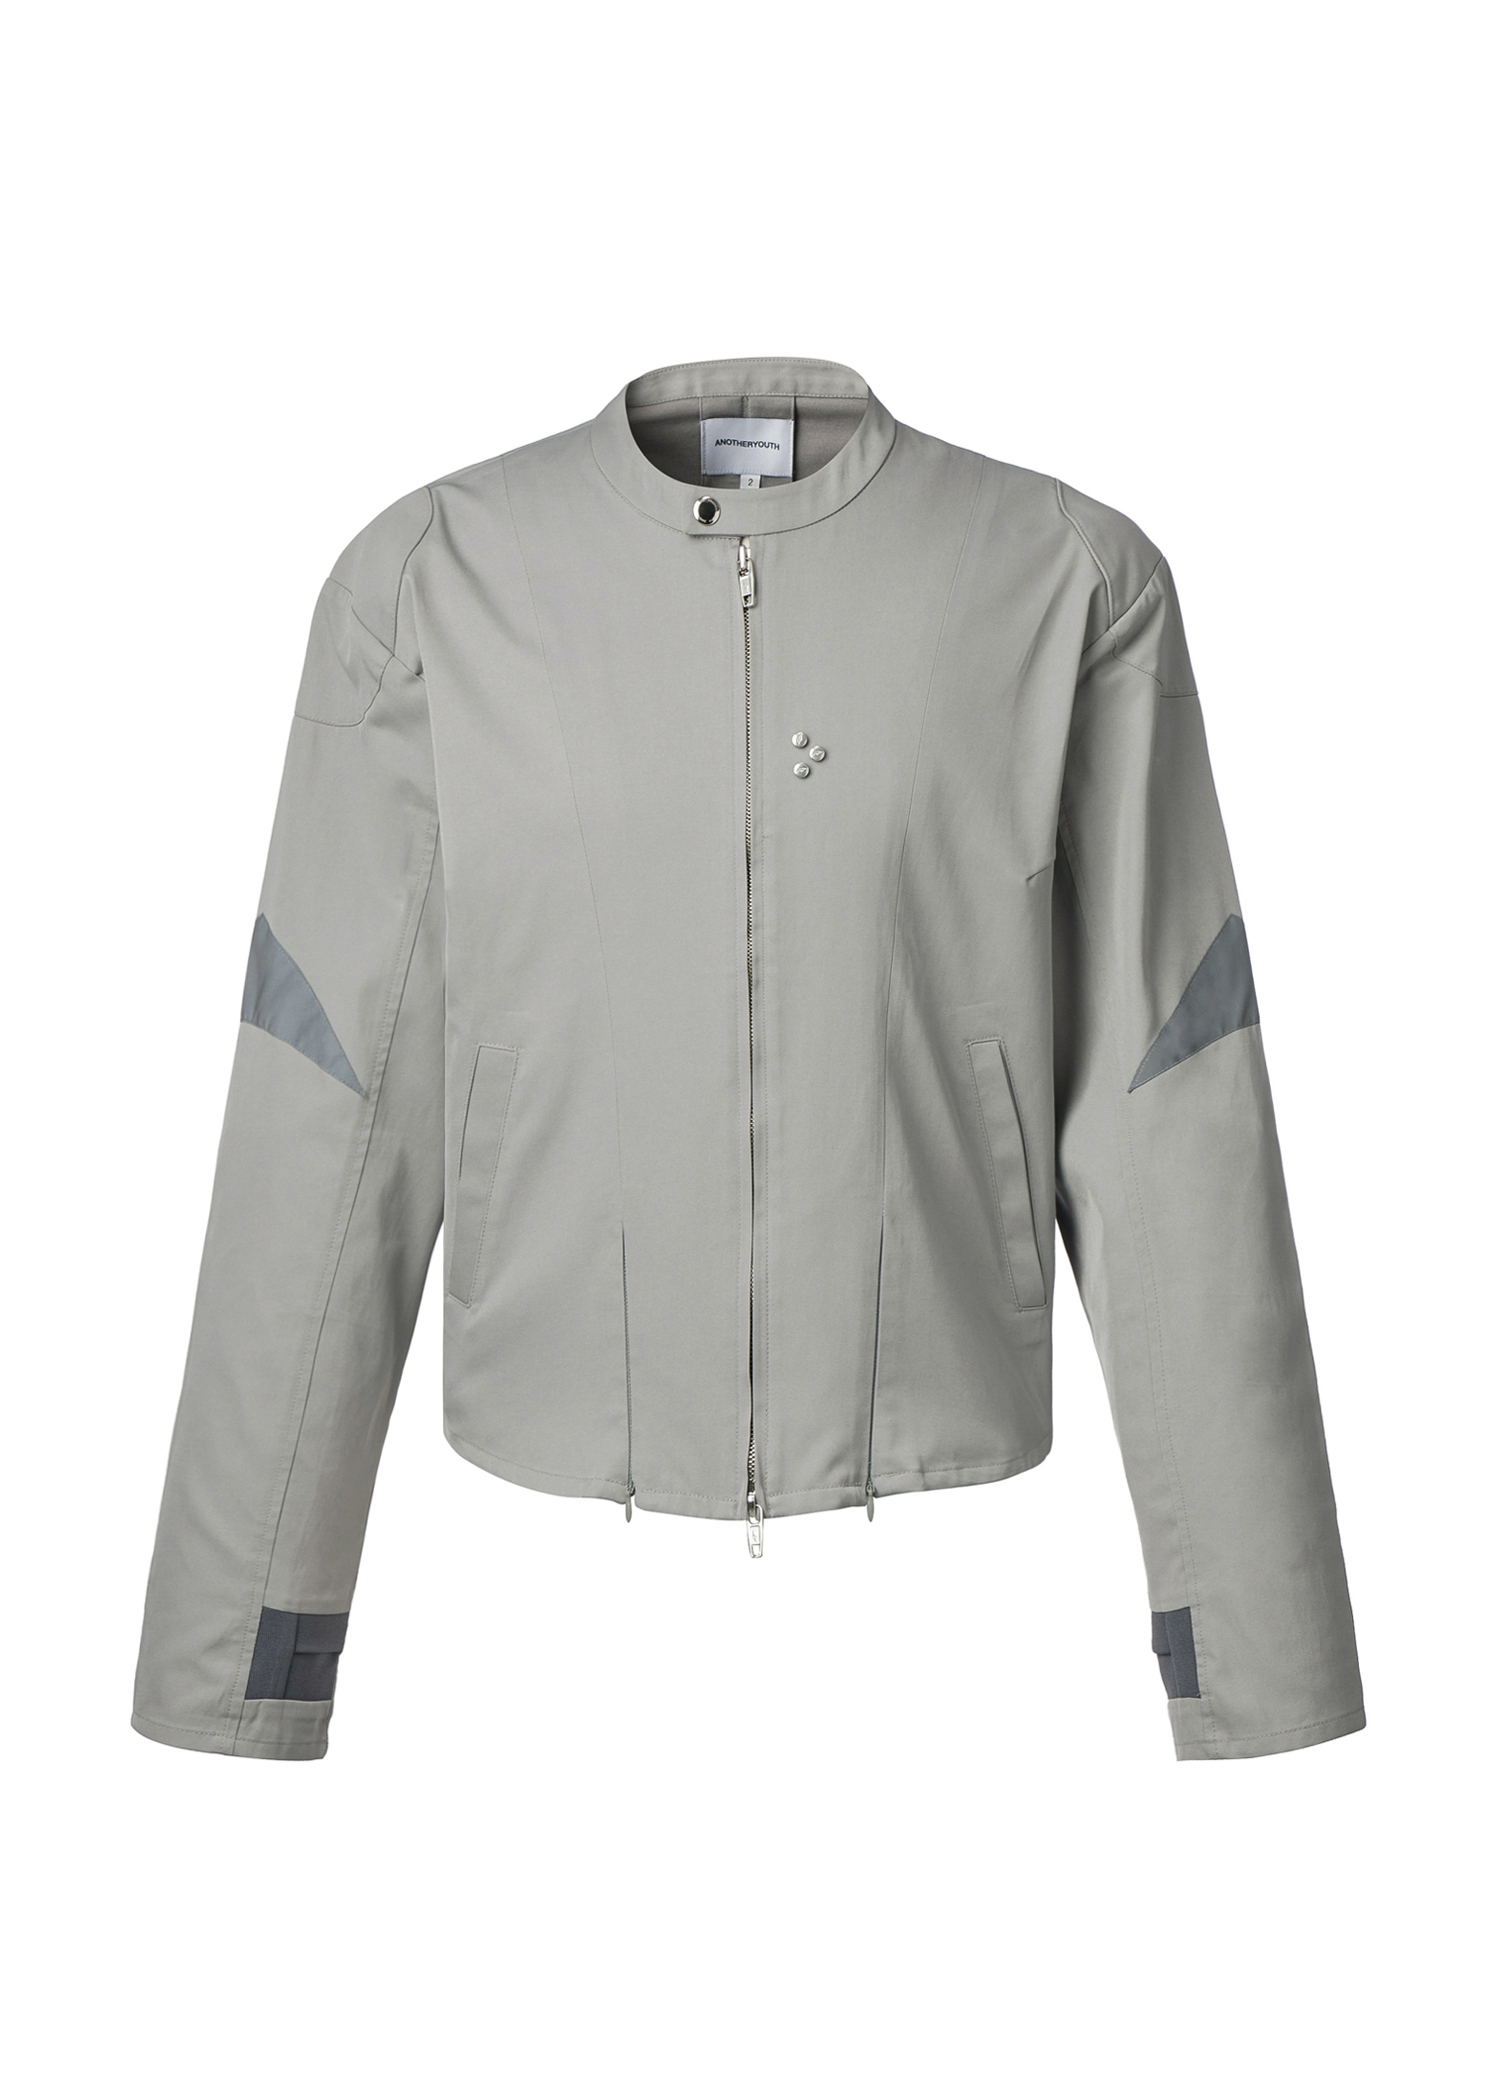 003-23 PC warmer jacket - sand grey